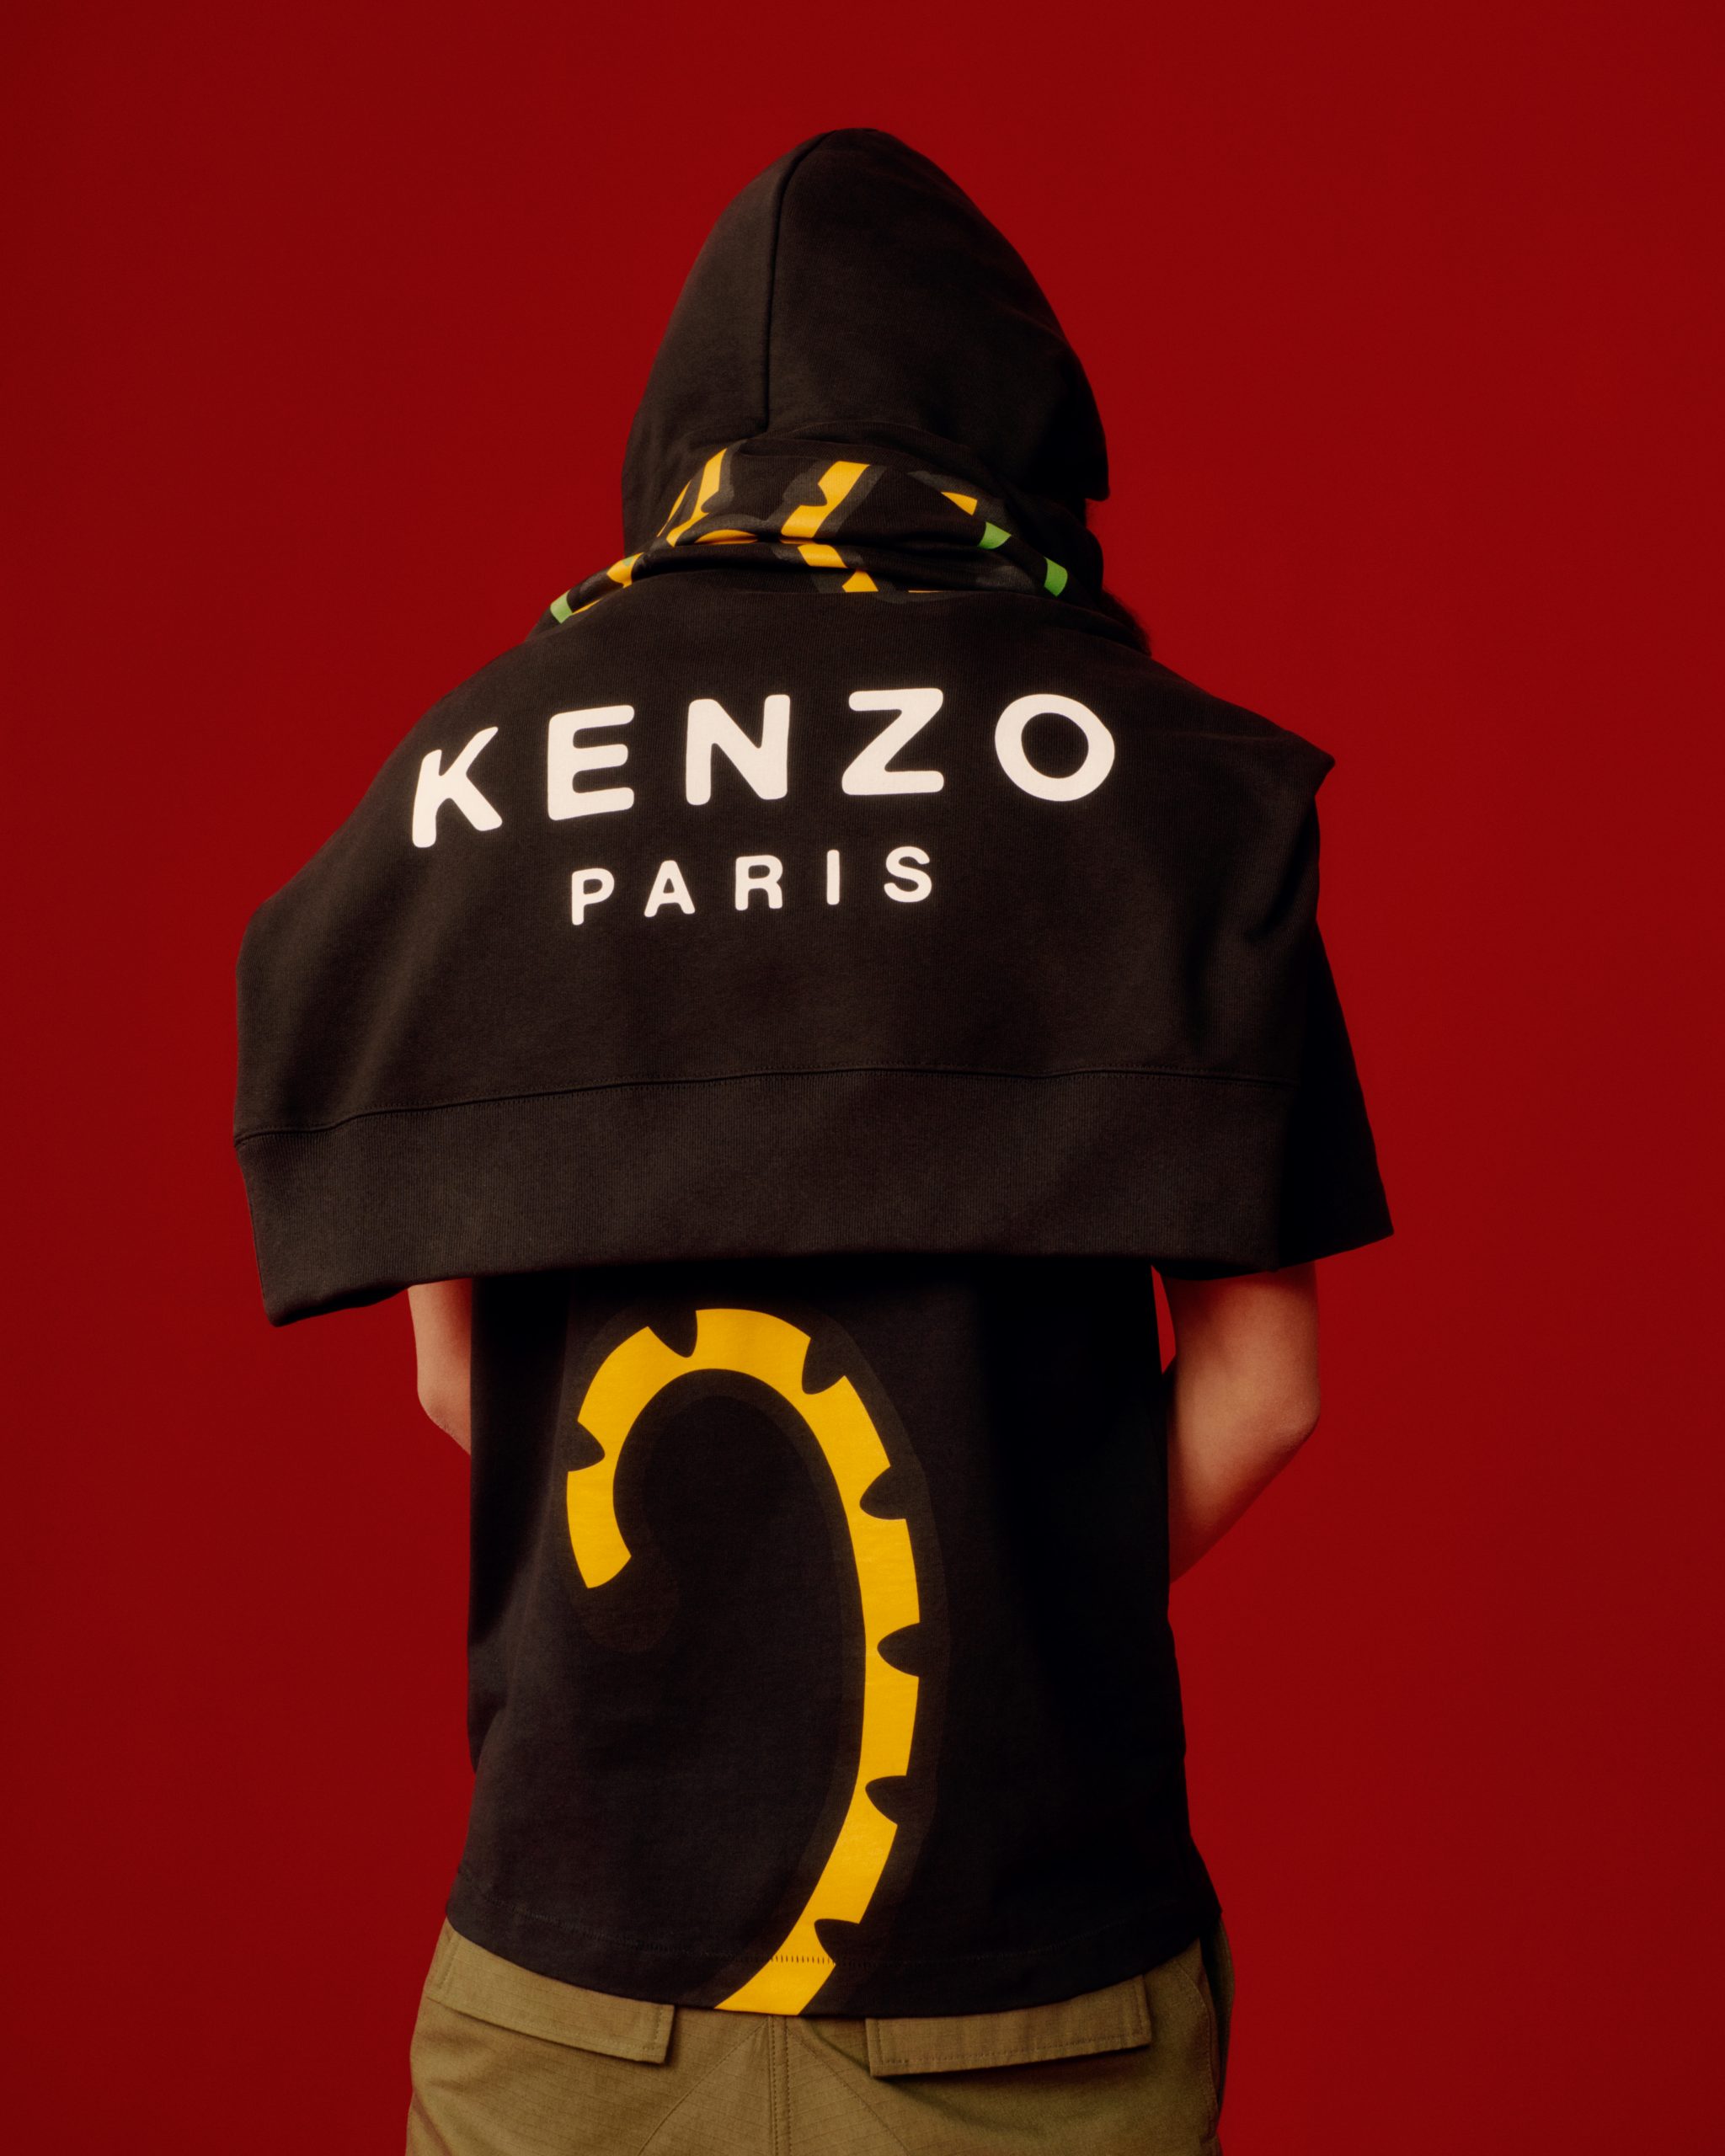 Kenzo Unveils Third Limited Edition Capsule Under Nigo's Artistic